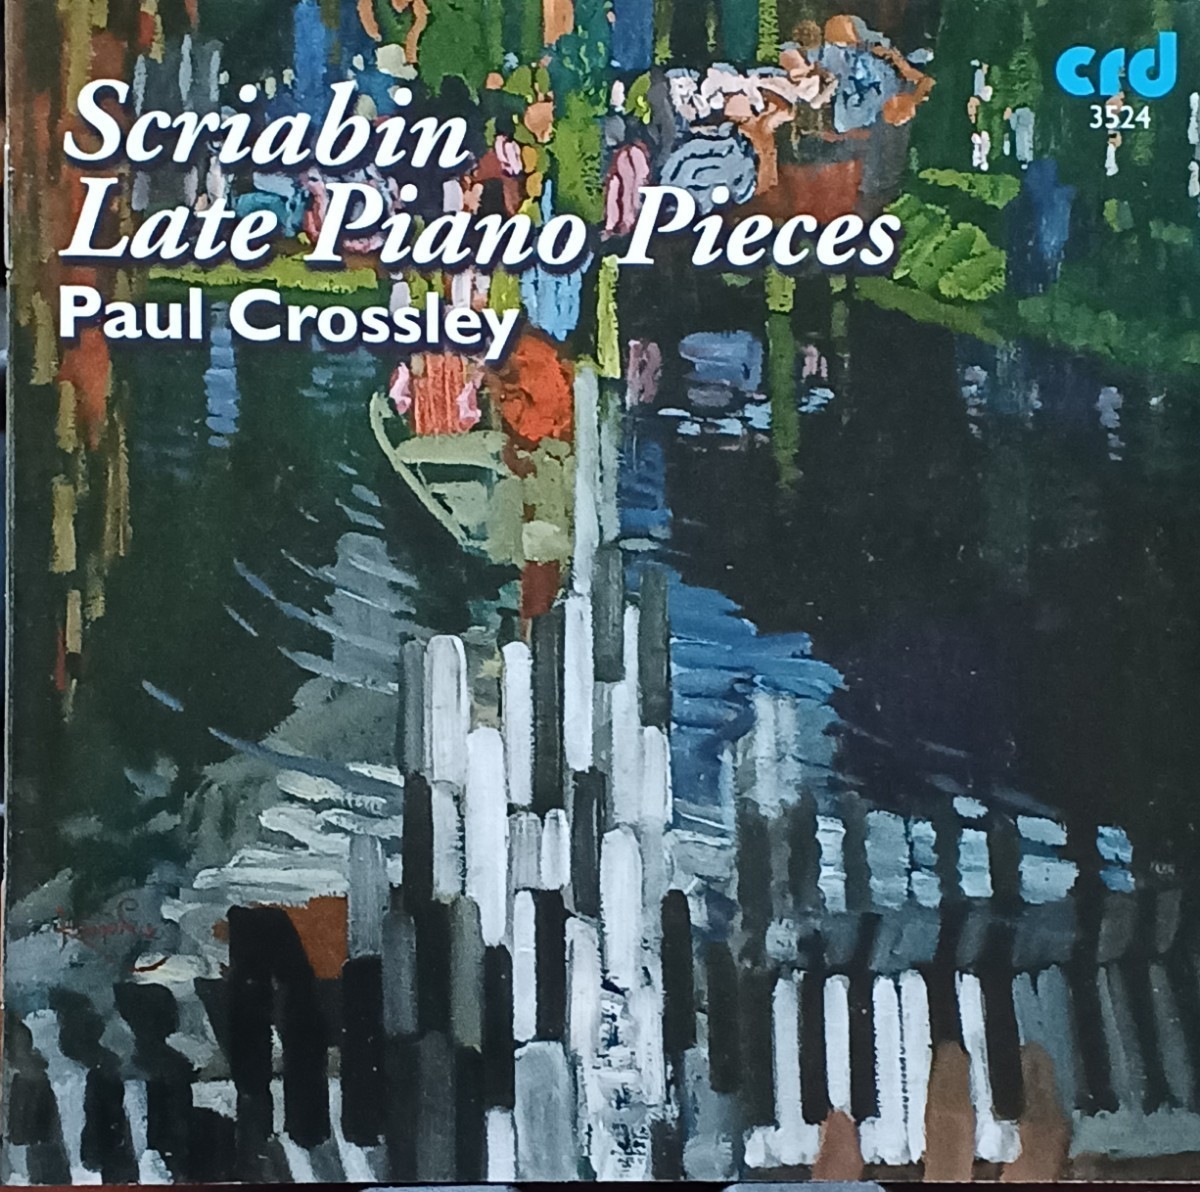 sk Rya - bin : latter term piano work compilation paul (pole) * Cross Lee ( piano ) SCRIABIN : Late Piano Pieces (Paul*Crossley / piano)